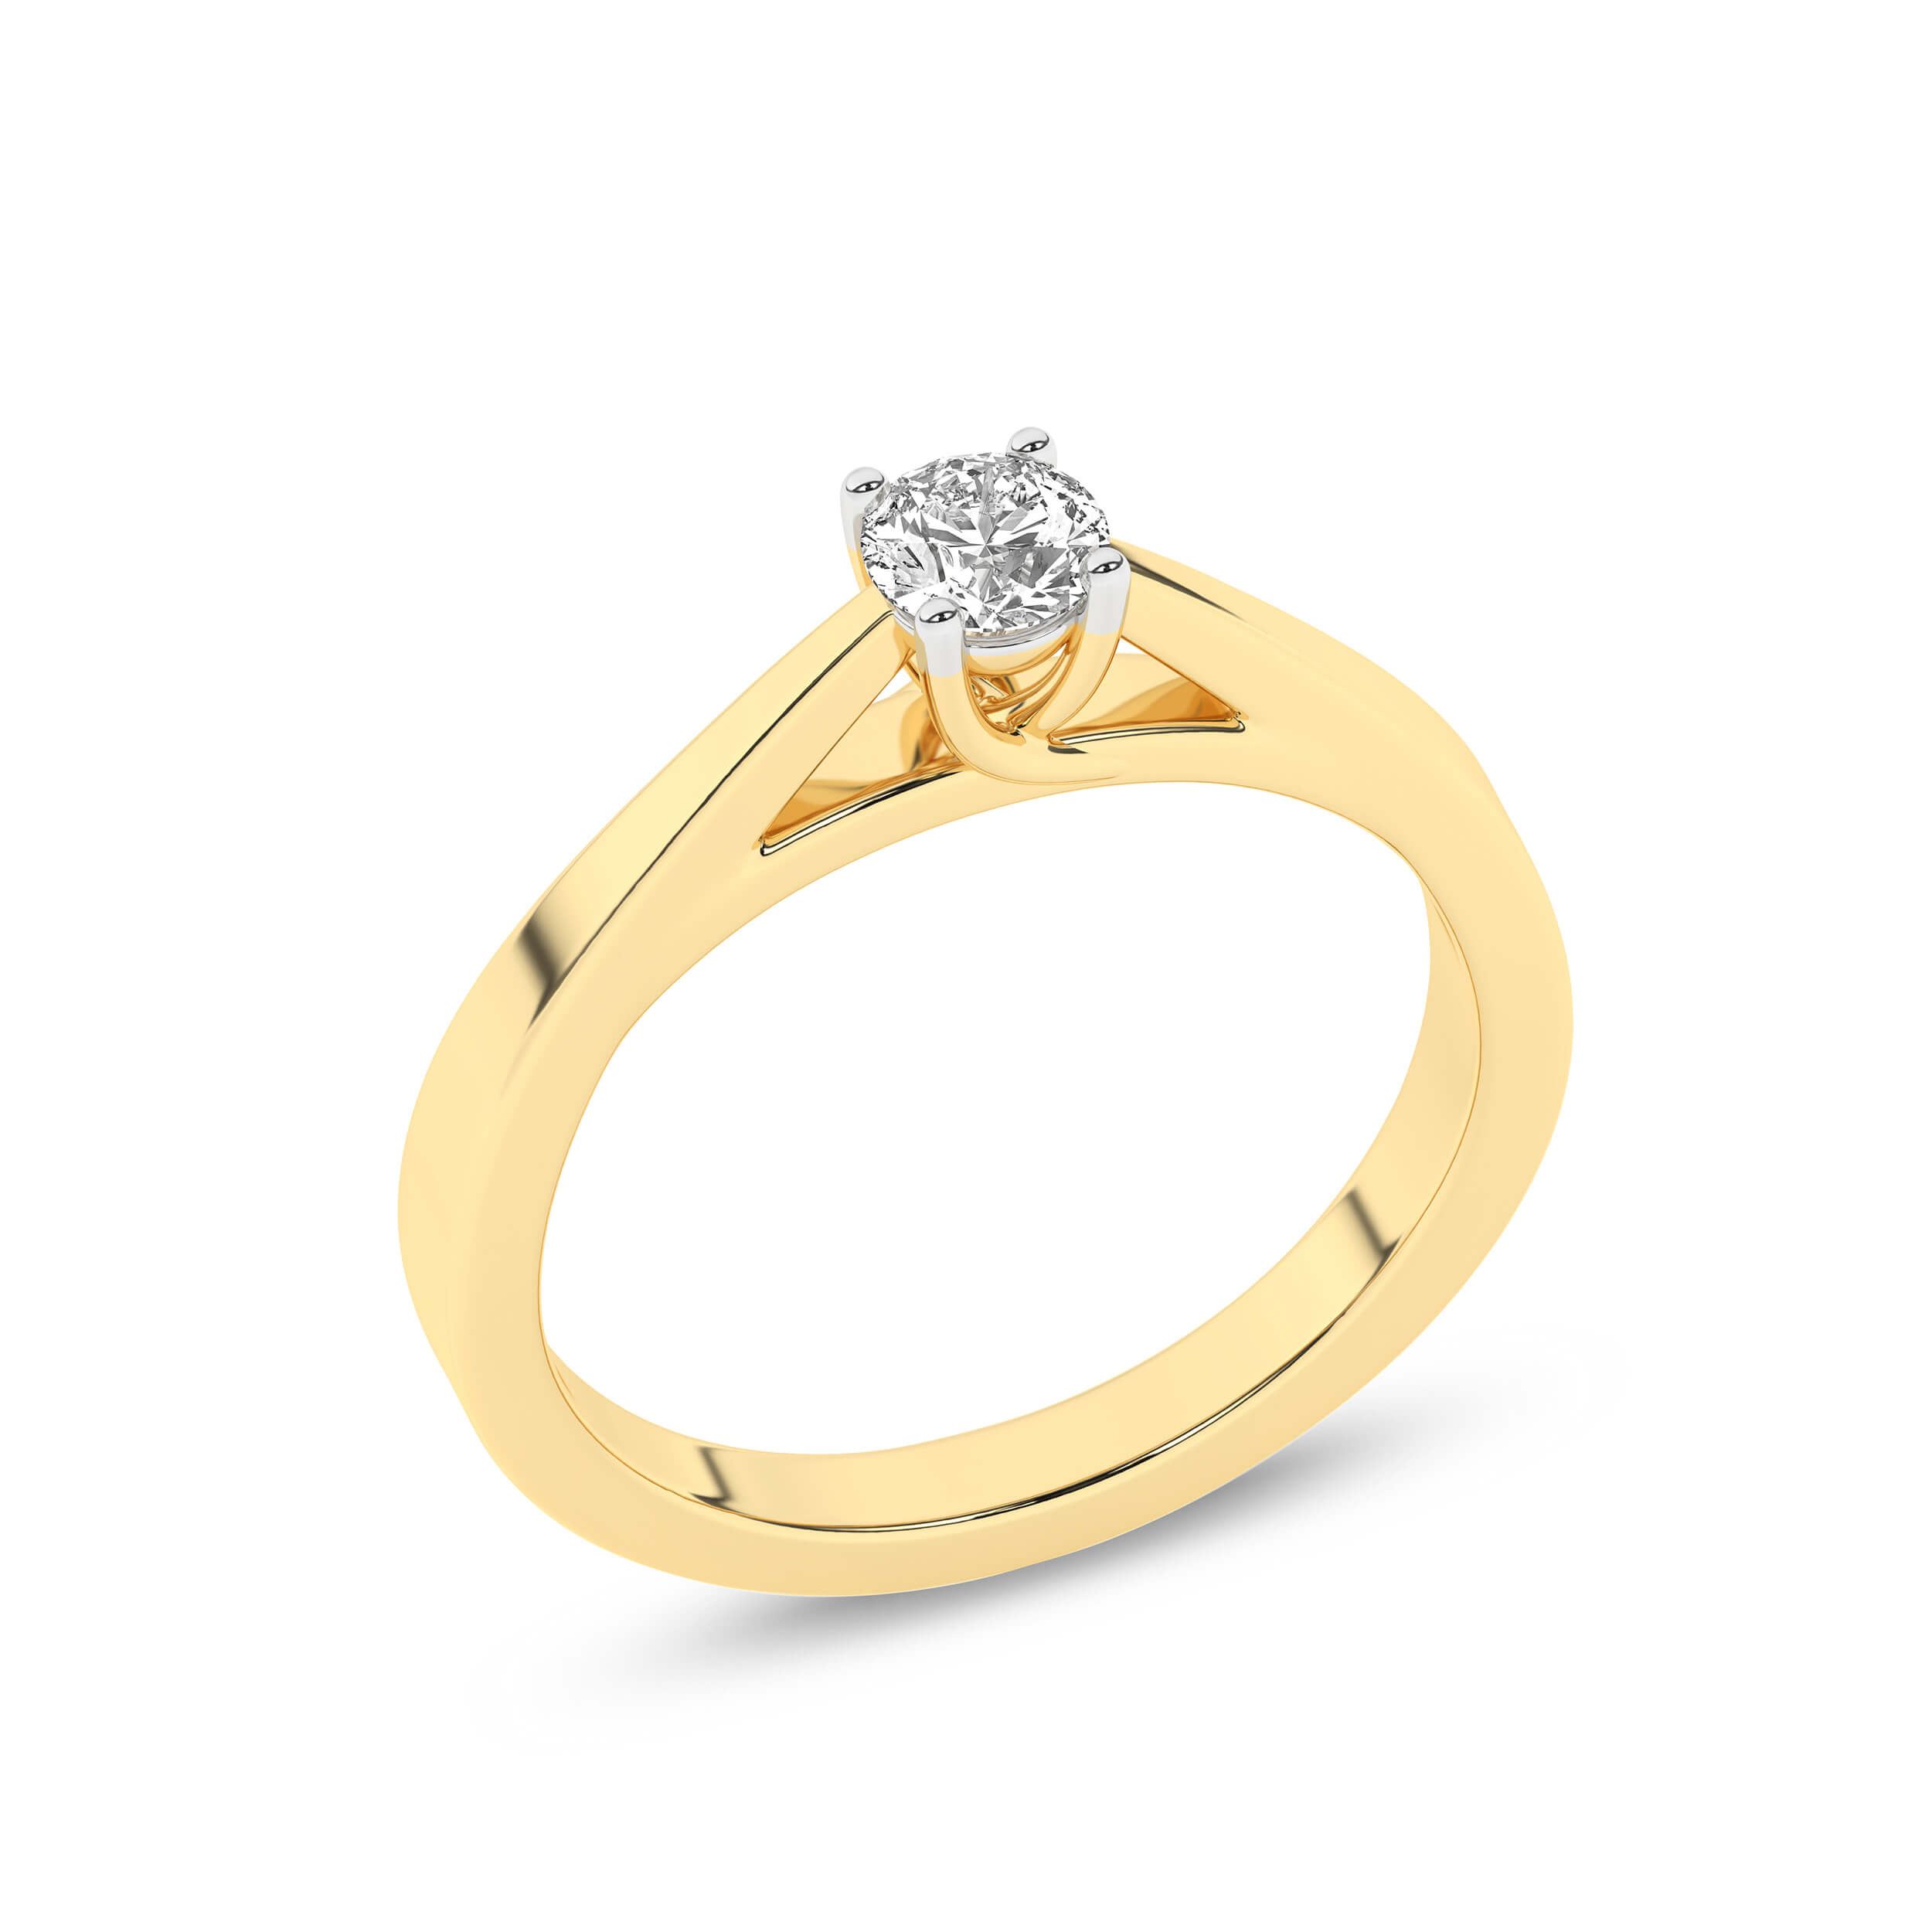 Inel de logodna din Aur Galben 14K cu Diamant 0.25Ct, articol RS1234, previzualizare foto 4